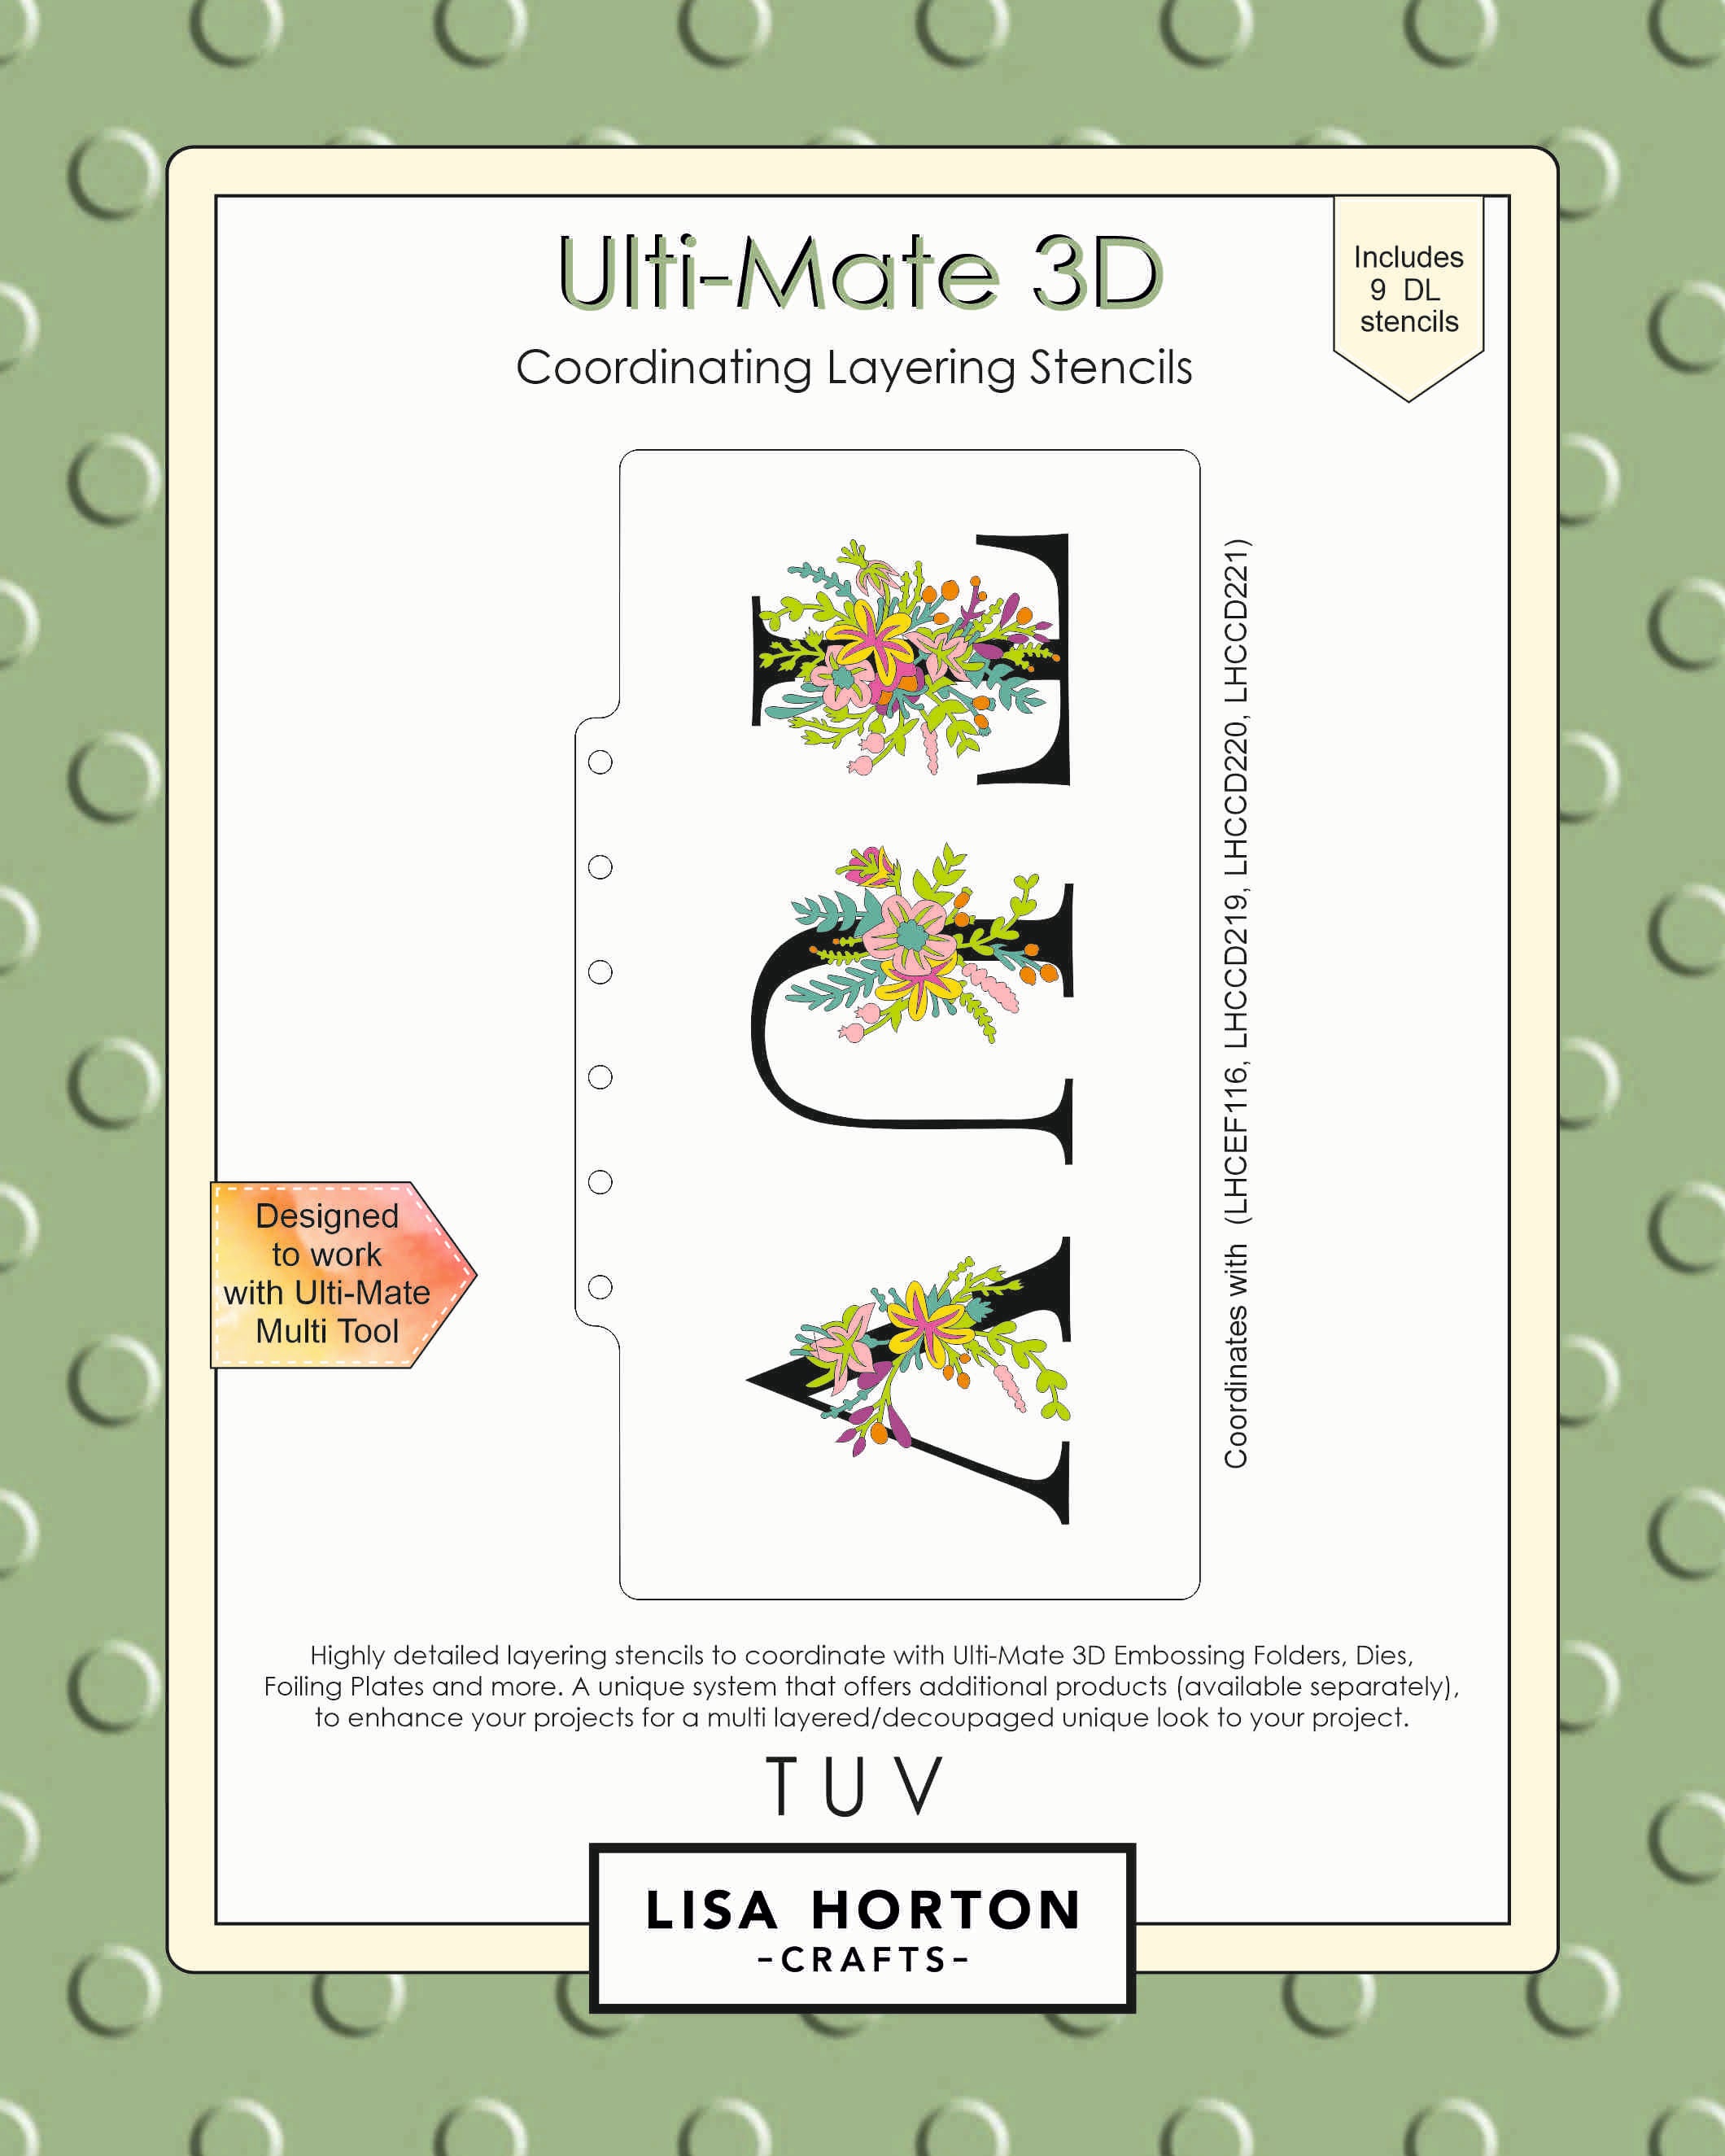 Lisa Horton Crafts Ulti-Mate 3D Slimline Layering Stencils TUV